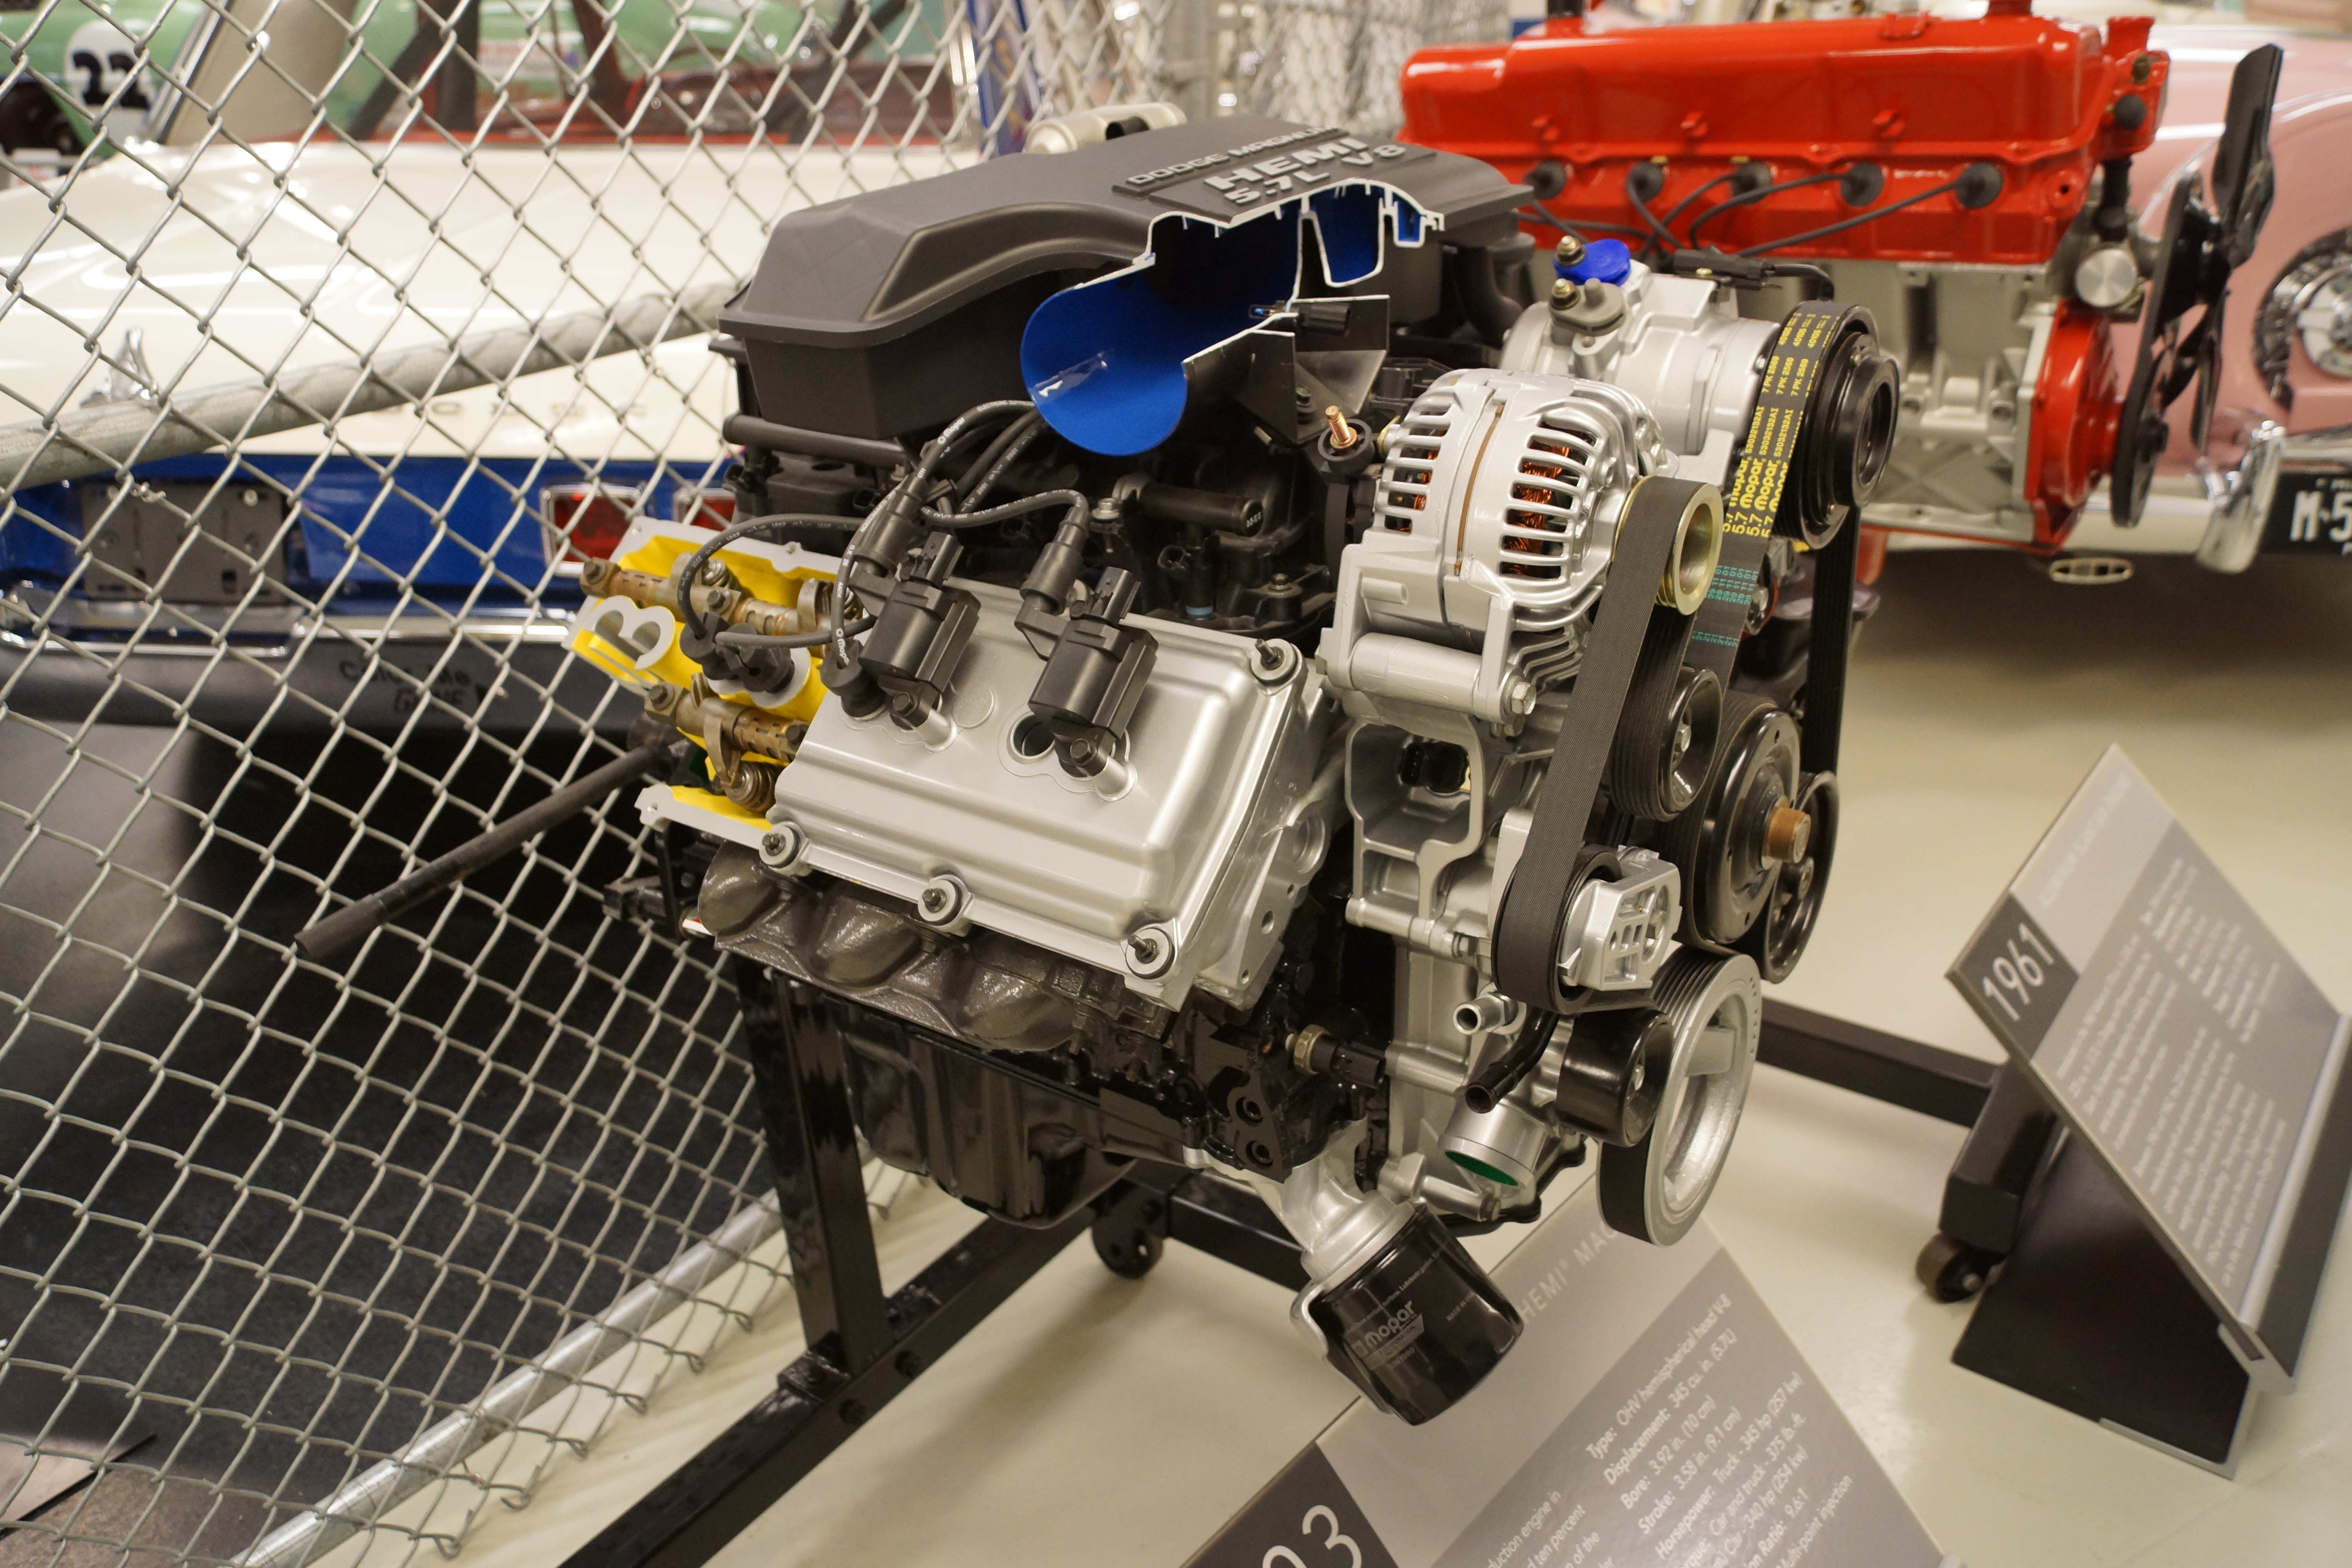 Chrysler Hemi engine - Wikipedia